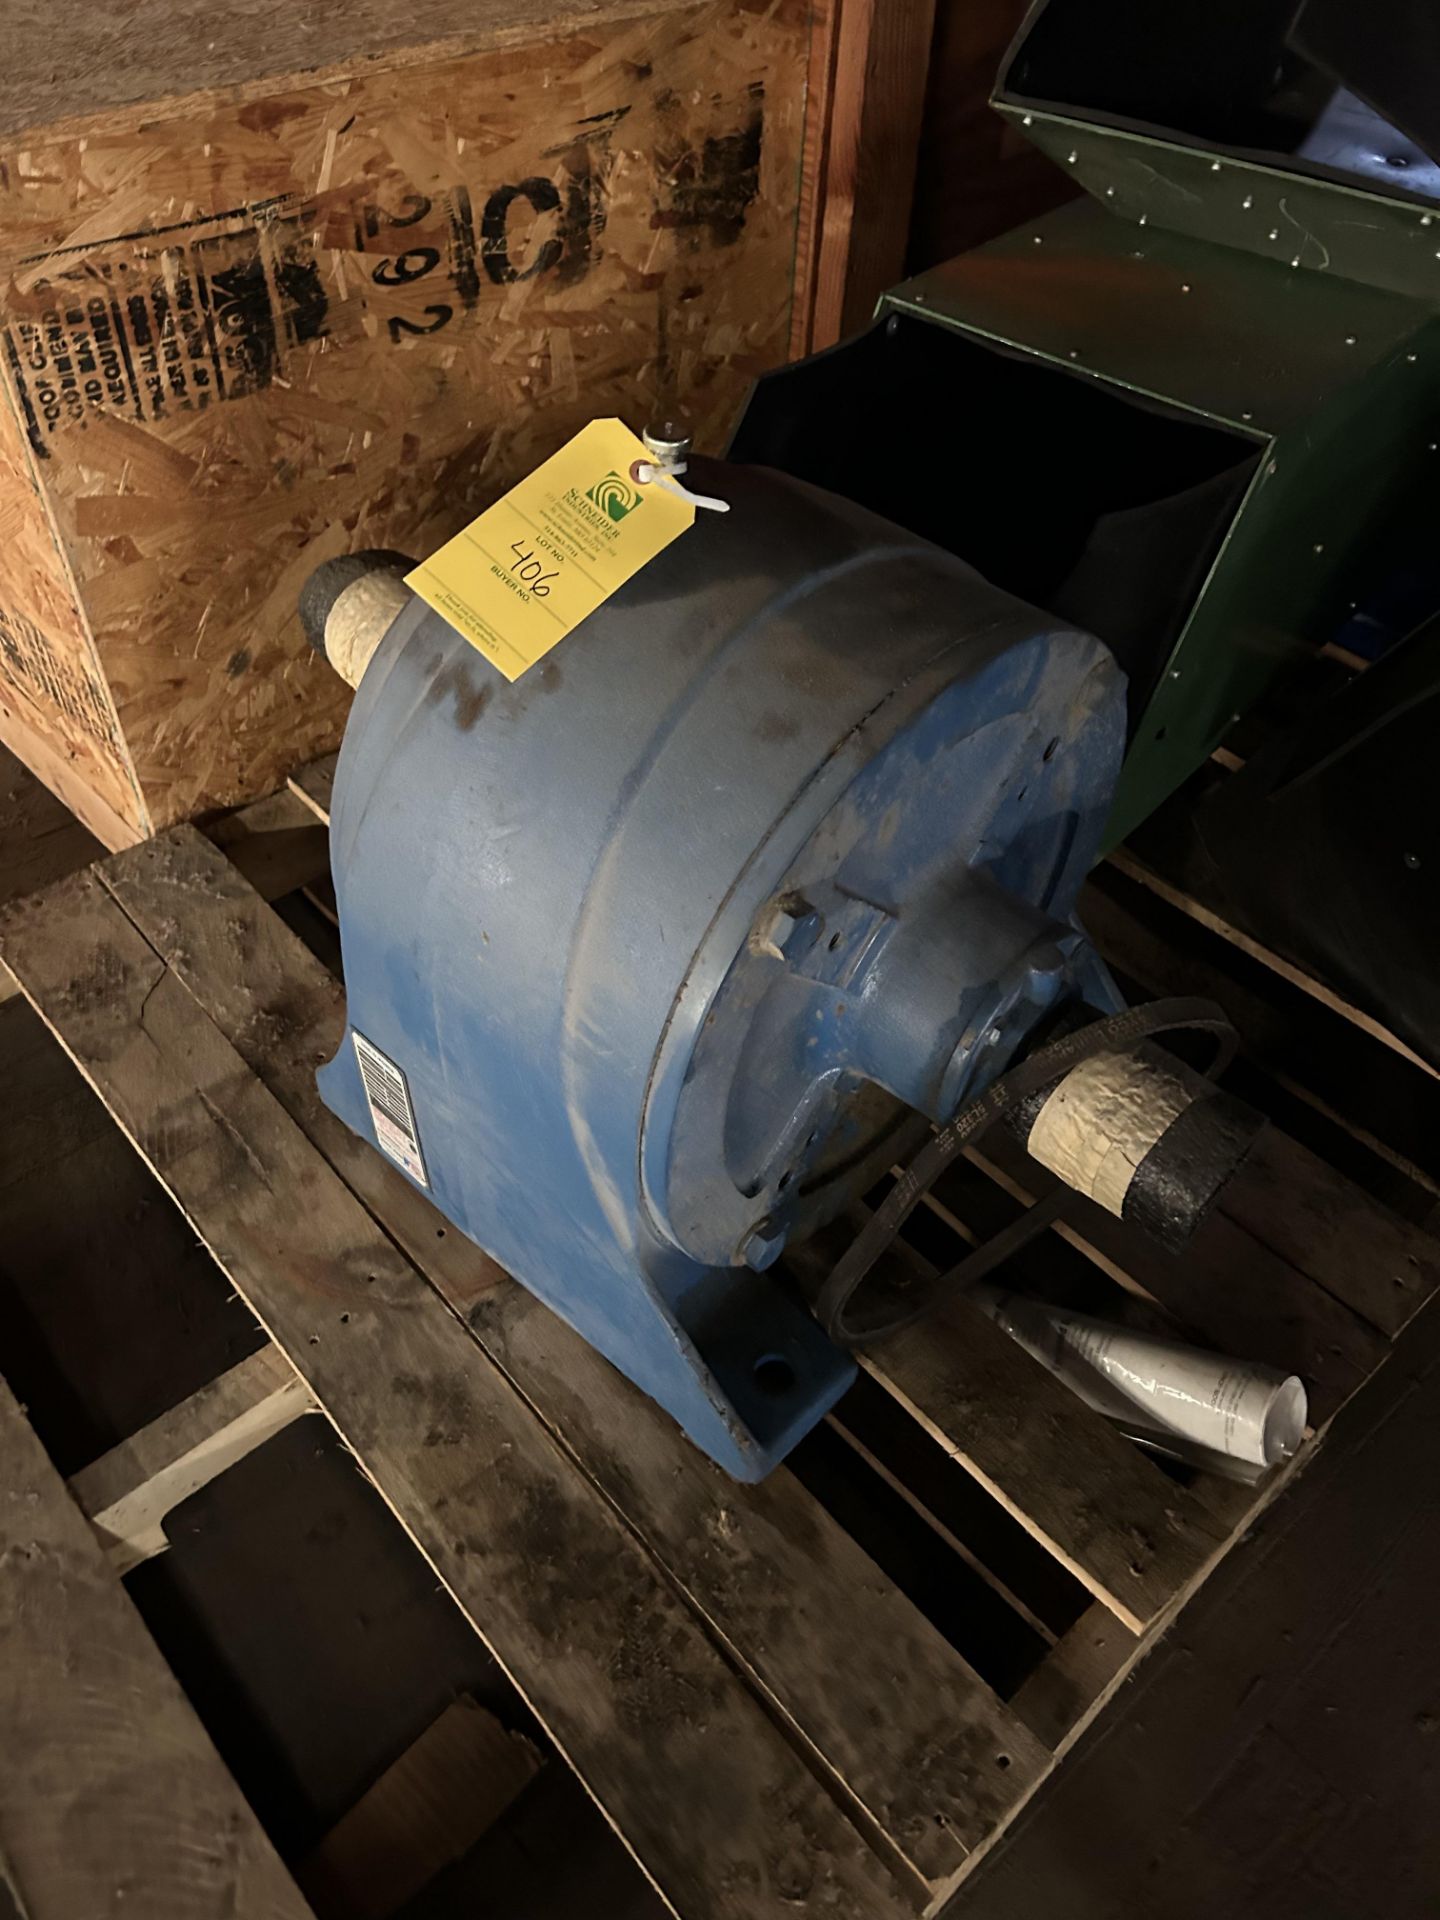 Line-o-Power Pump, Model #824BL-950, Rigging/ Removal Fee - $75